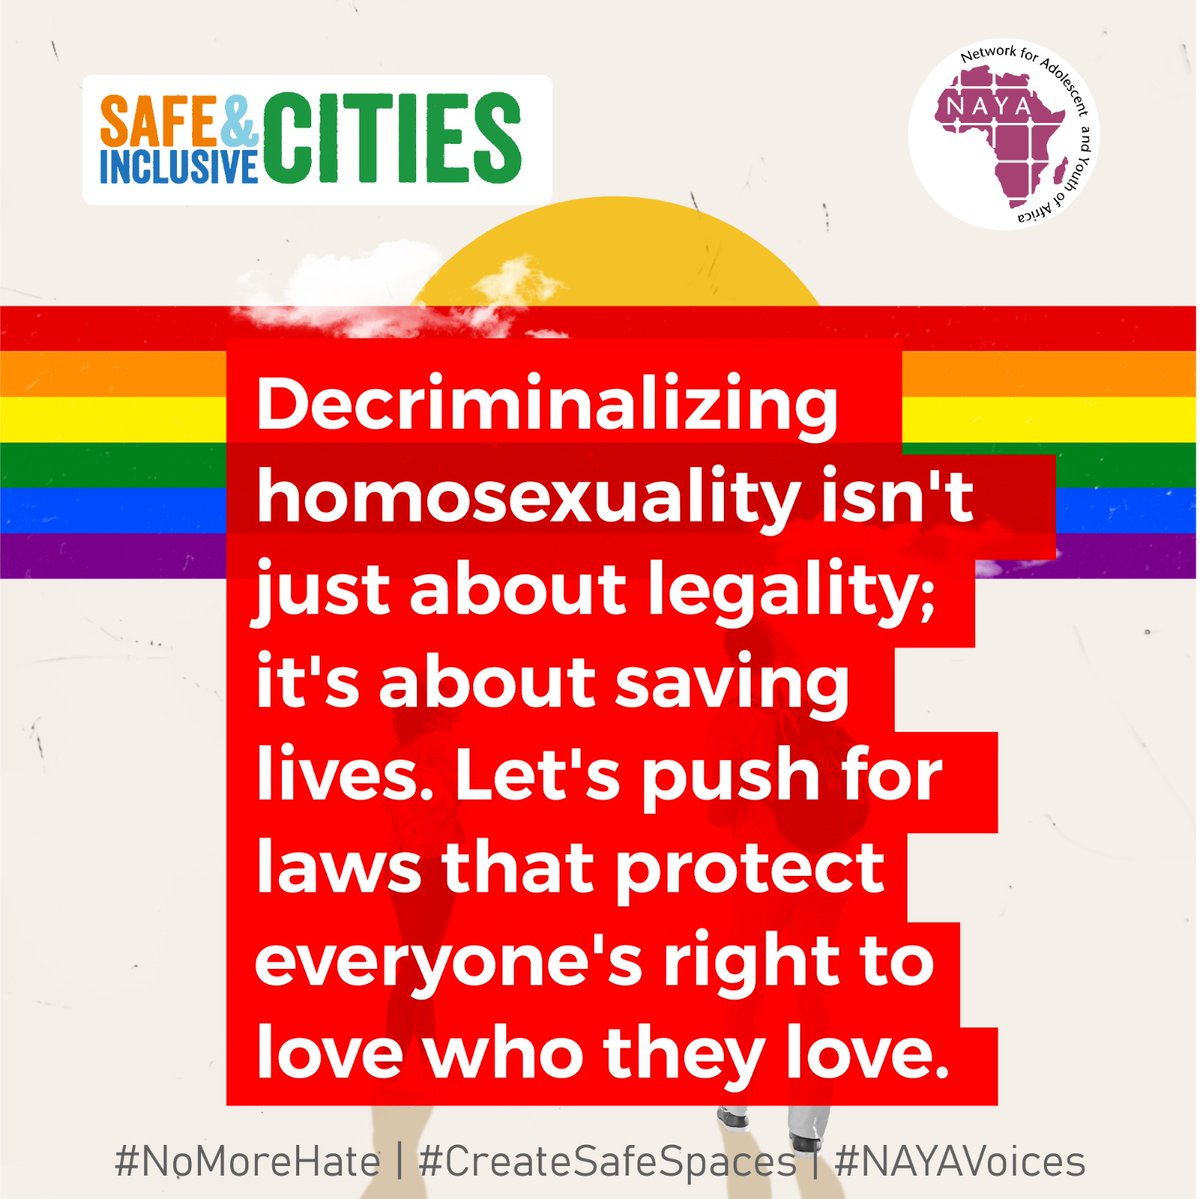 Decriminalizing homosexuality isn't just about legality; it's saving lives. Let's push for laws that protect everyone's right to love who they love. #NoMoreHate #CreateSafeSpaces #NAYAVoices @RHRNKenya @NAYAKenya @KenyaSRHR @CSA_Kenya @Nairobits @lovemafrica @RaiseYourV_oice